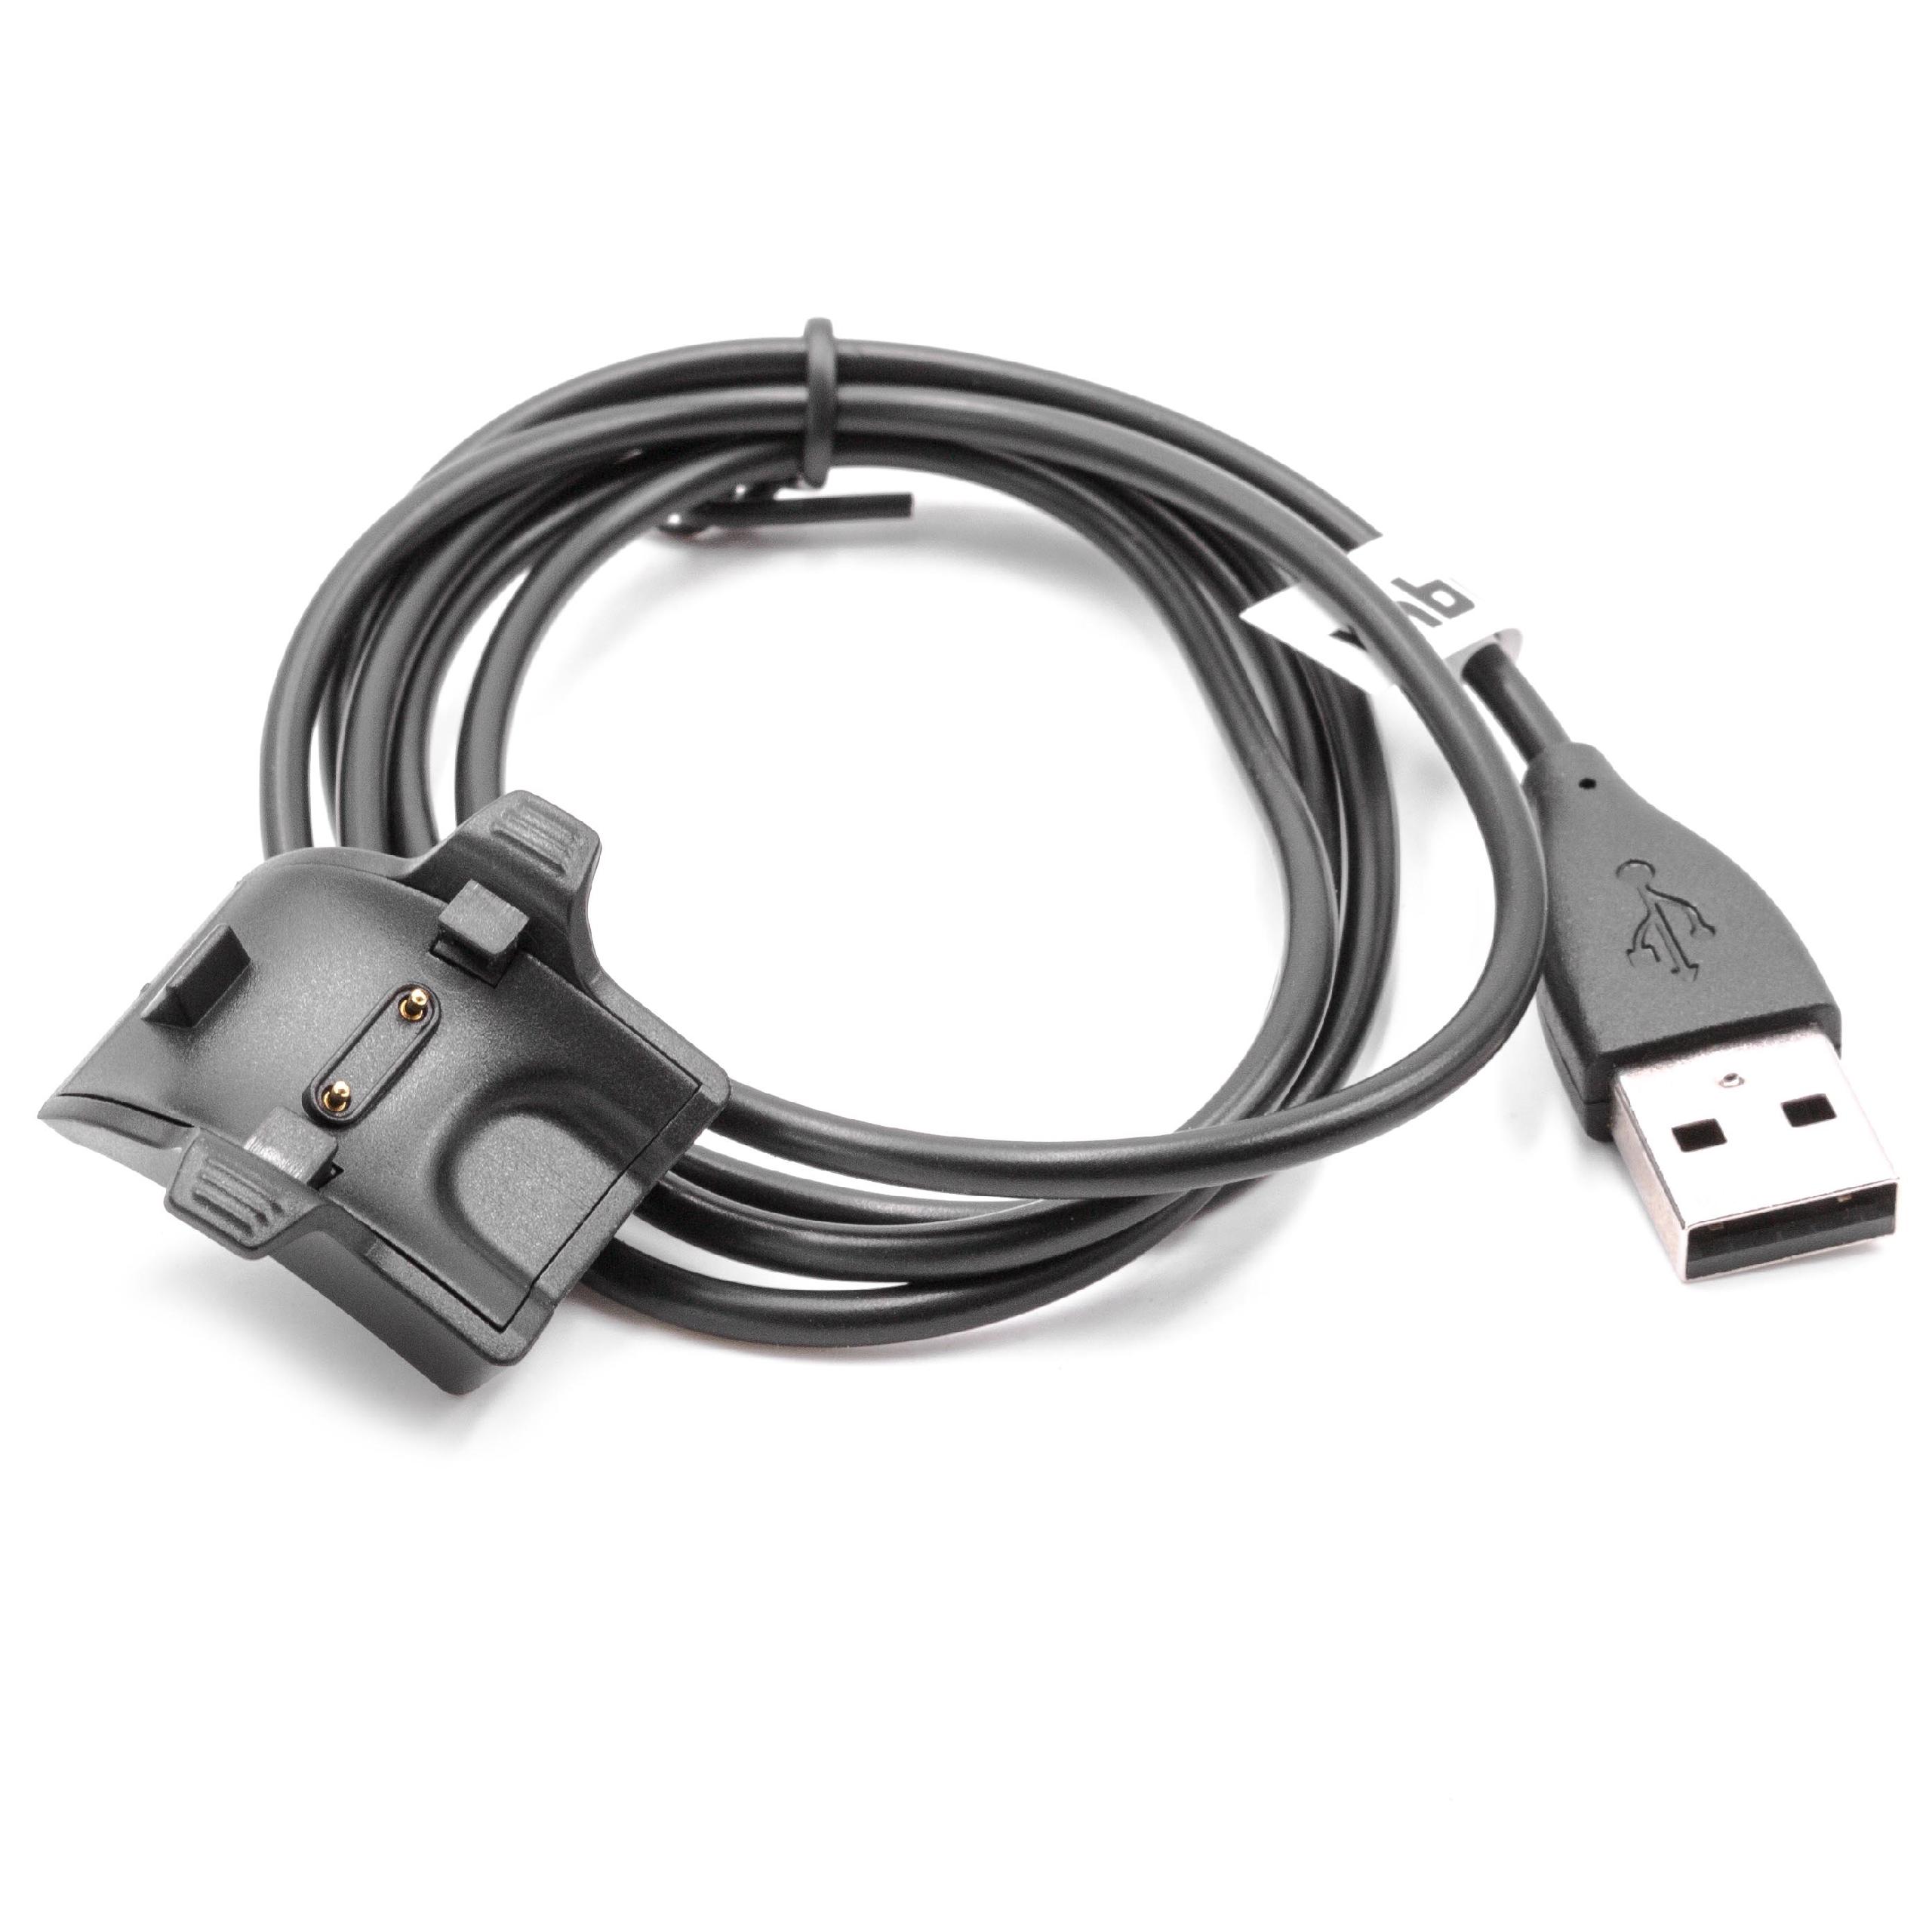 Cable de carga USB para smartwatch Huawei Honor Band 3, Band 4 - negro 100 cm